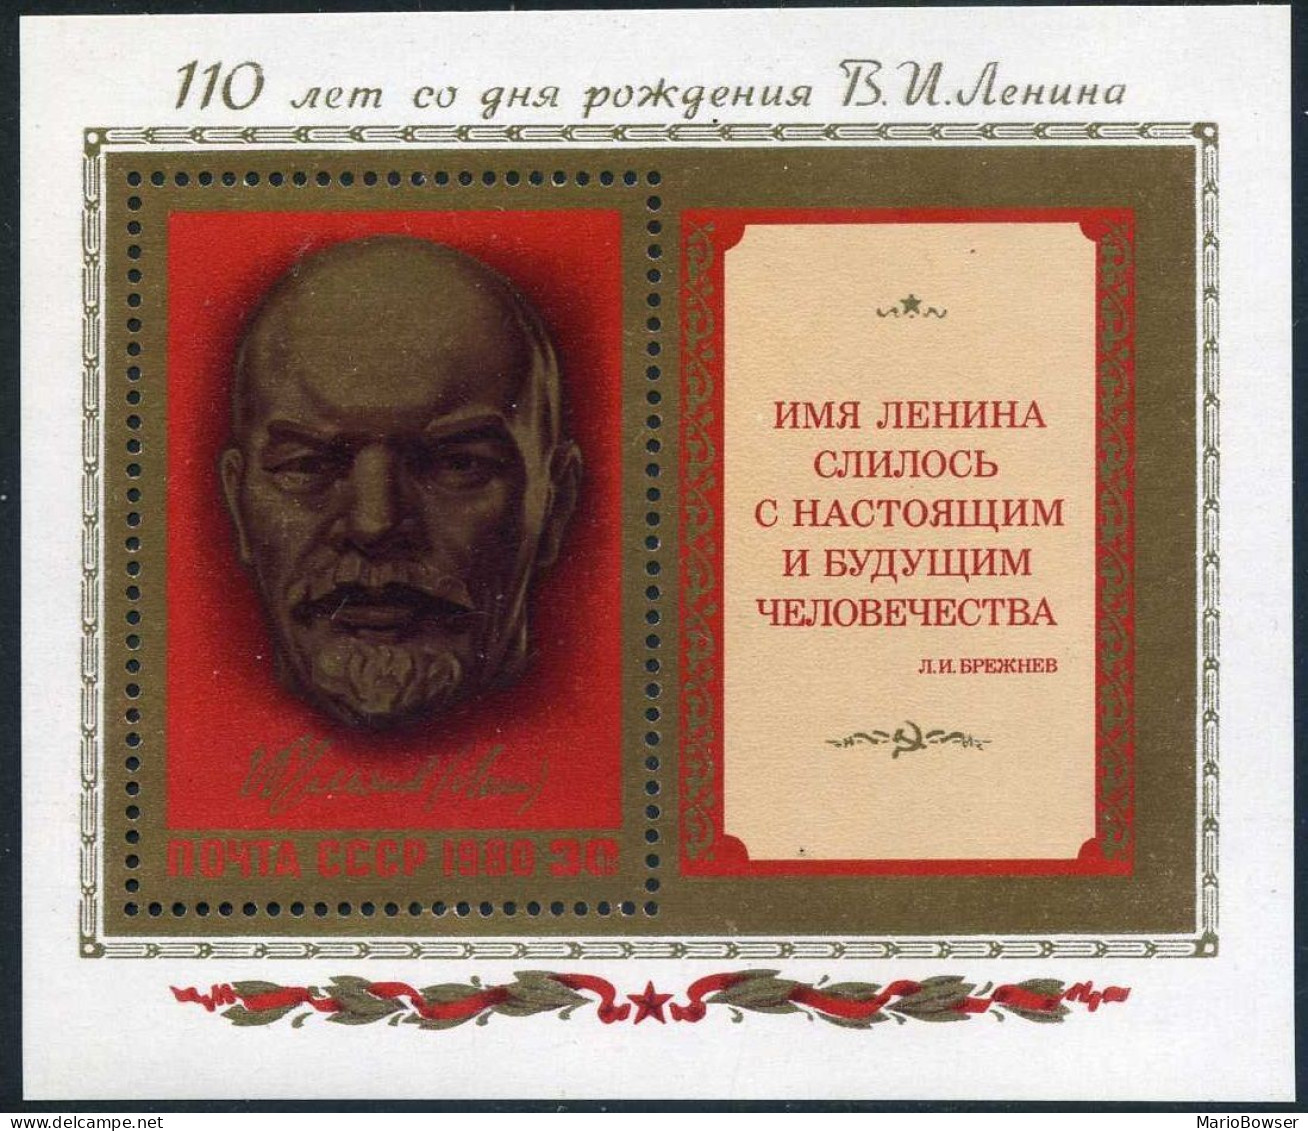 Russia 4822, MNH. Michel 4944 Bl.147. Vladimir Lenin 110th Birth Ann. 1980. - Nuovi